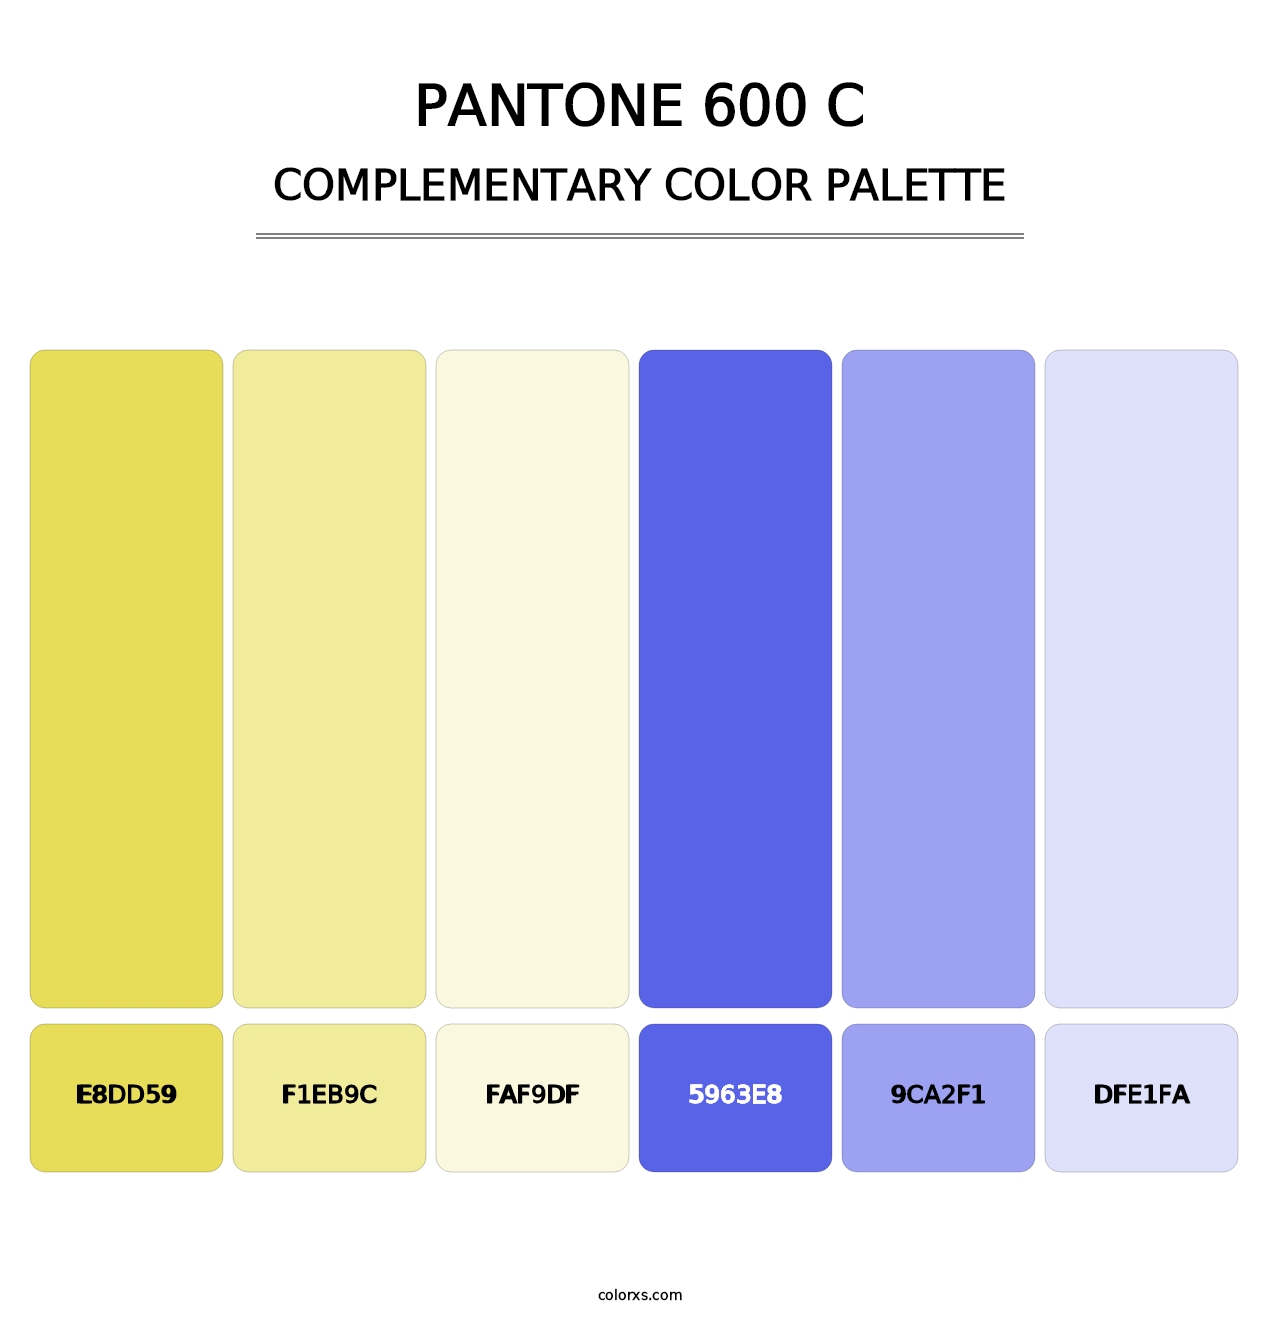 PANTONE 600 C - Complementary Color Palette